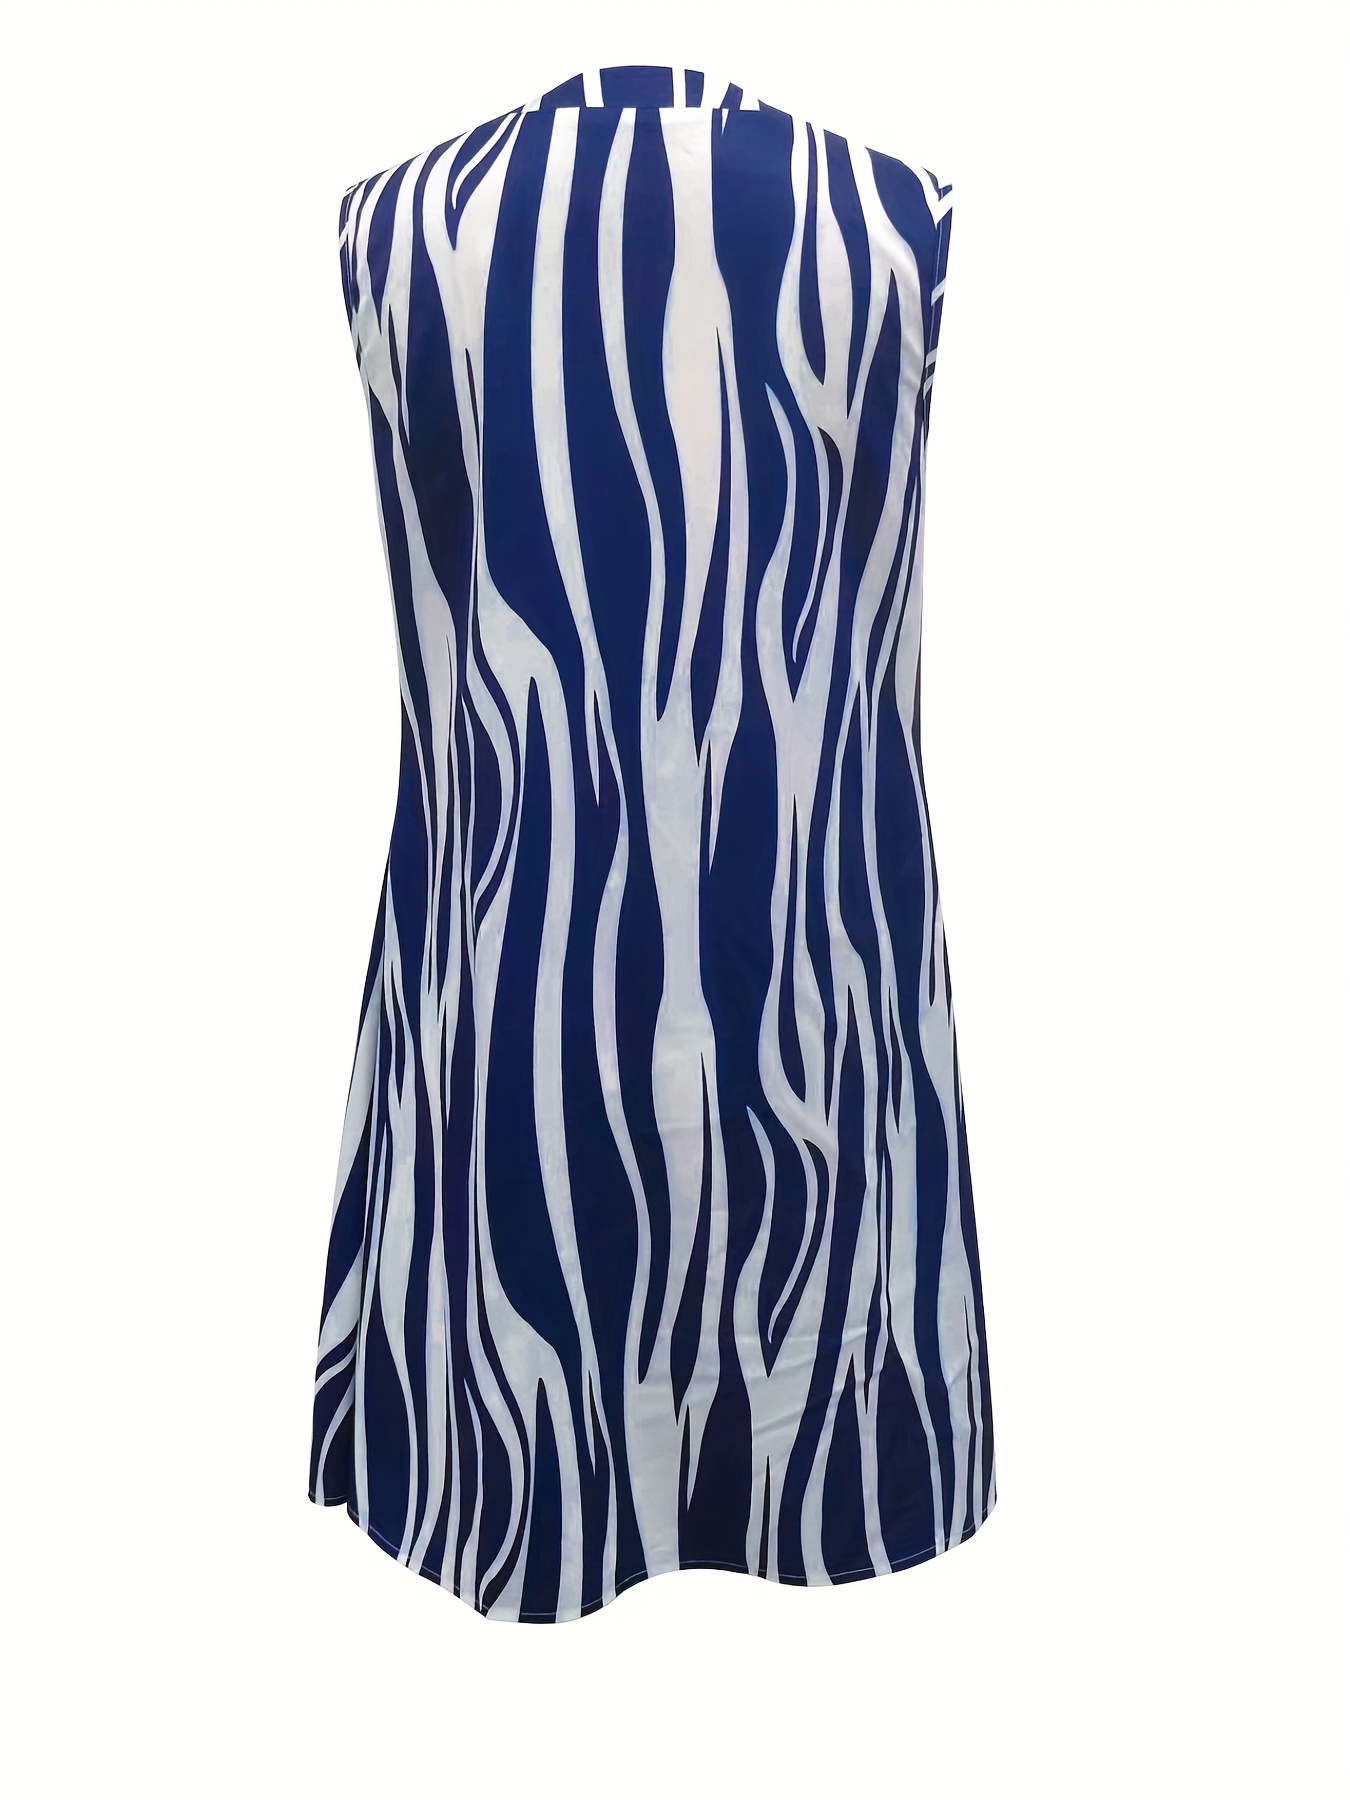 abstract ripple print dress casual v neck sleeveless dress womens clothing details 55